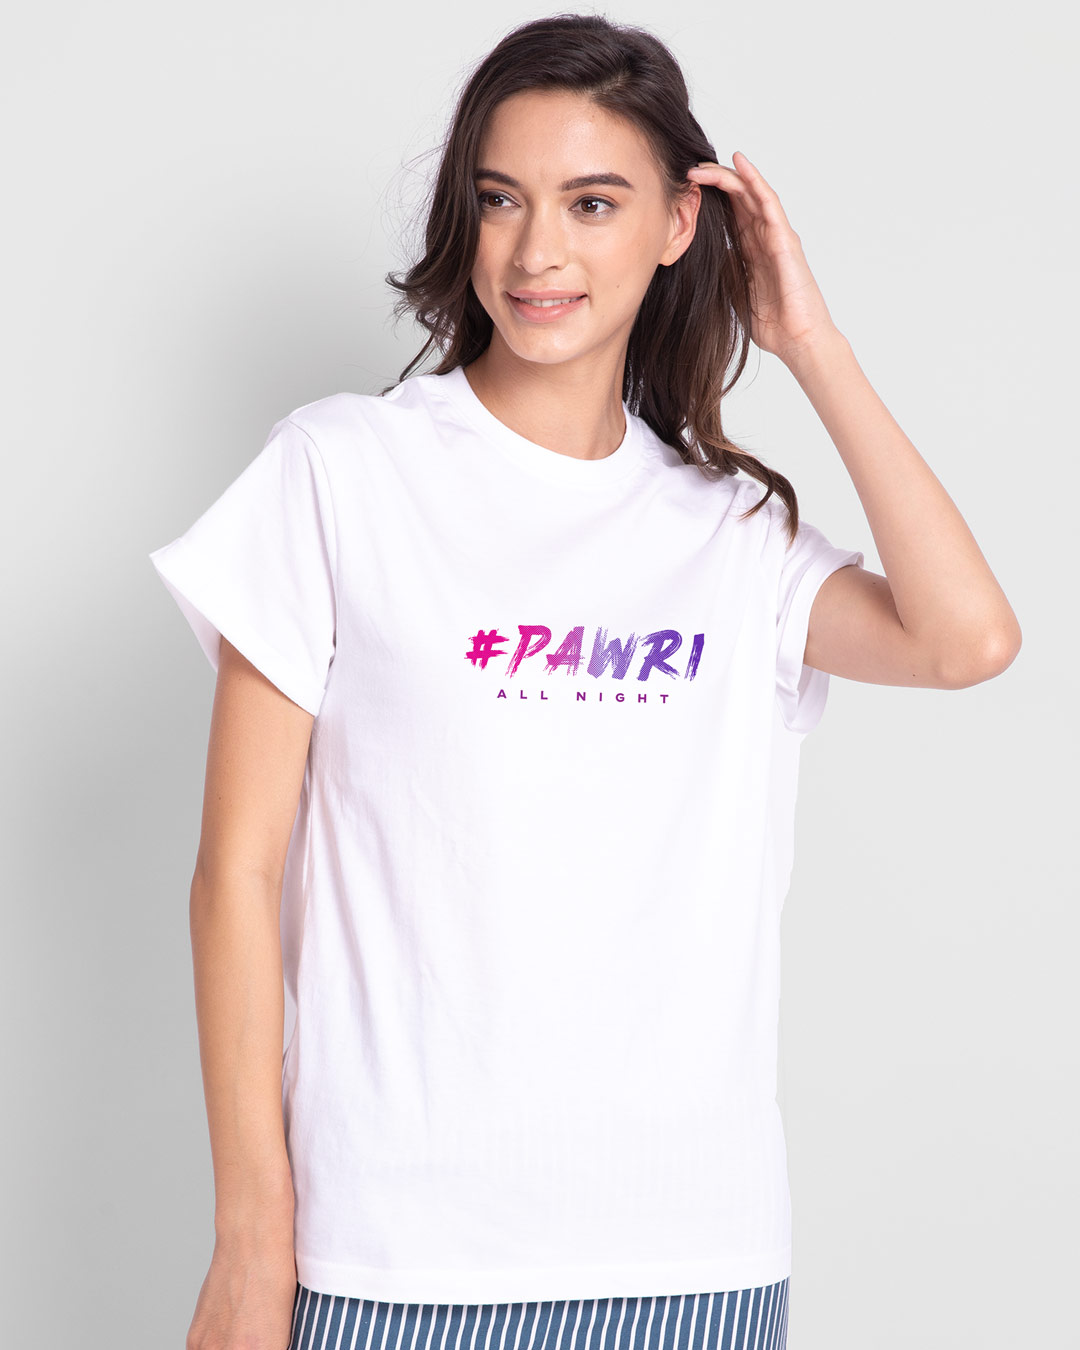 Shop Pawri All Night BoyfriendT-Shirt White-Back